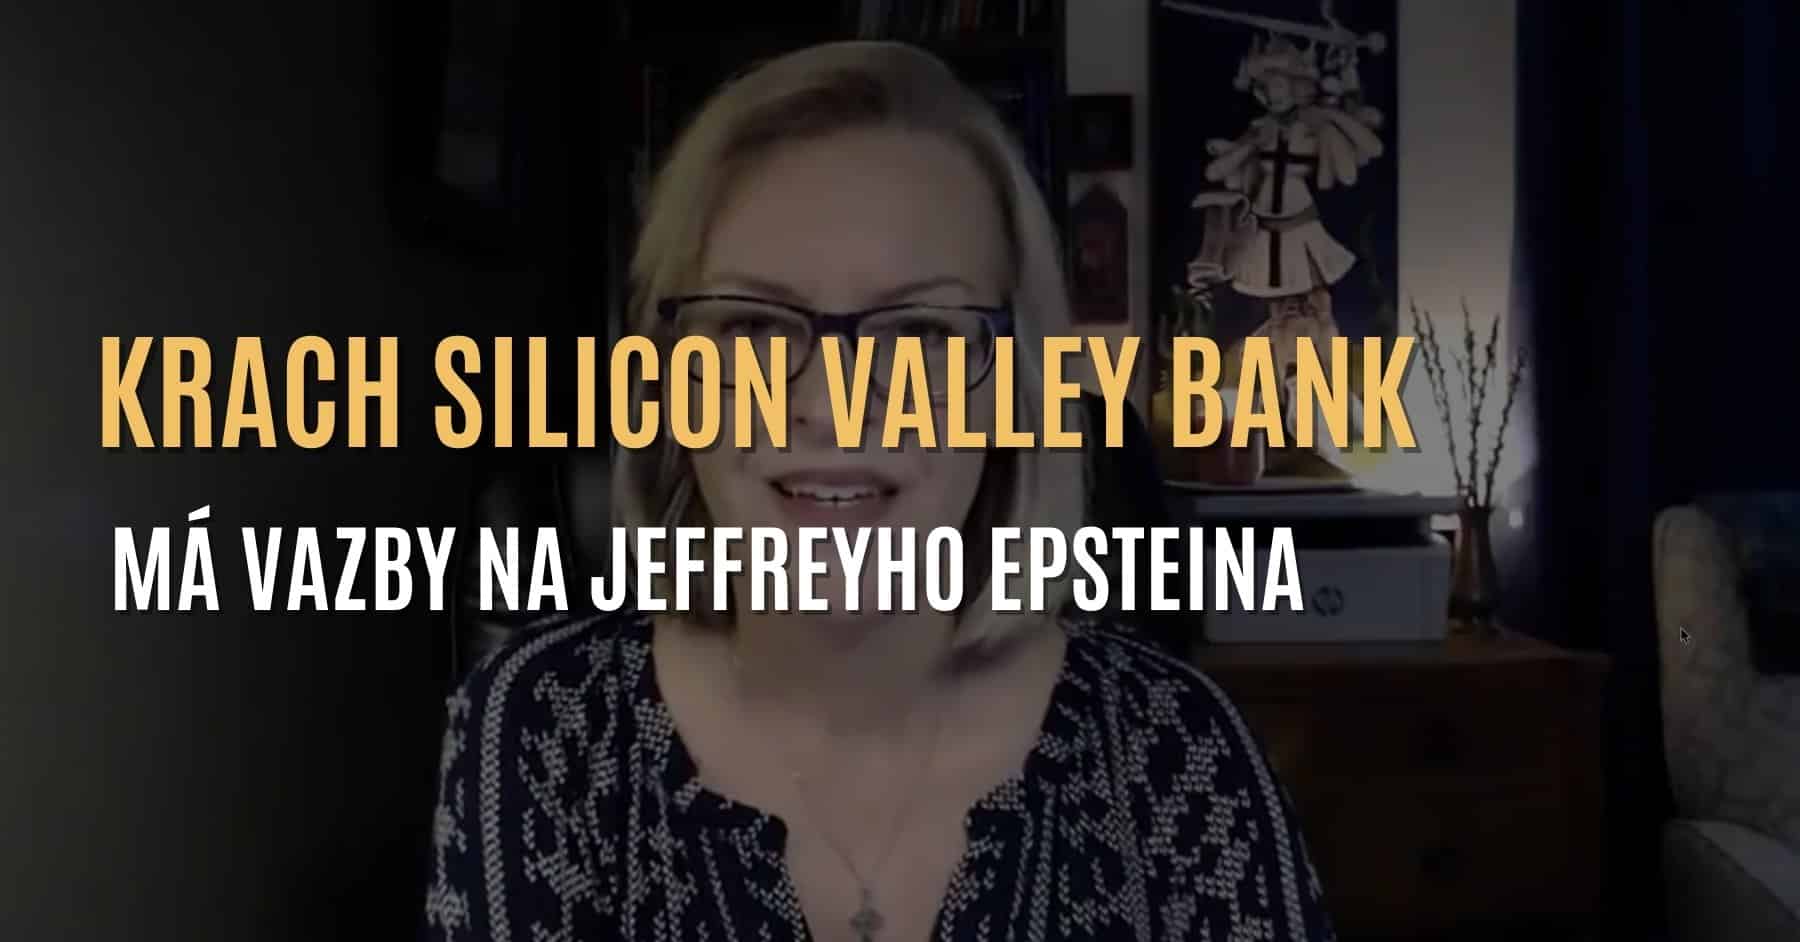 Krach Silicon valley Bank má vazby na Jeffreyho Epsteina